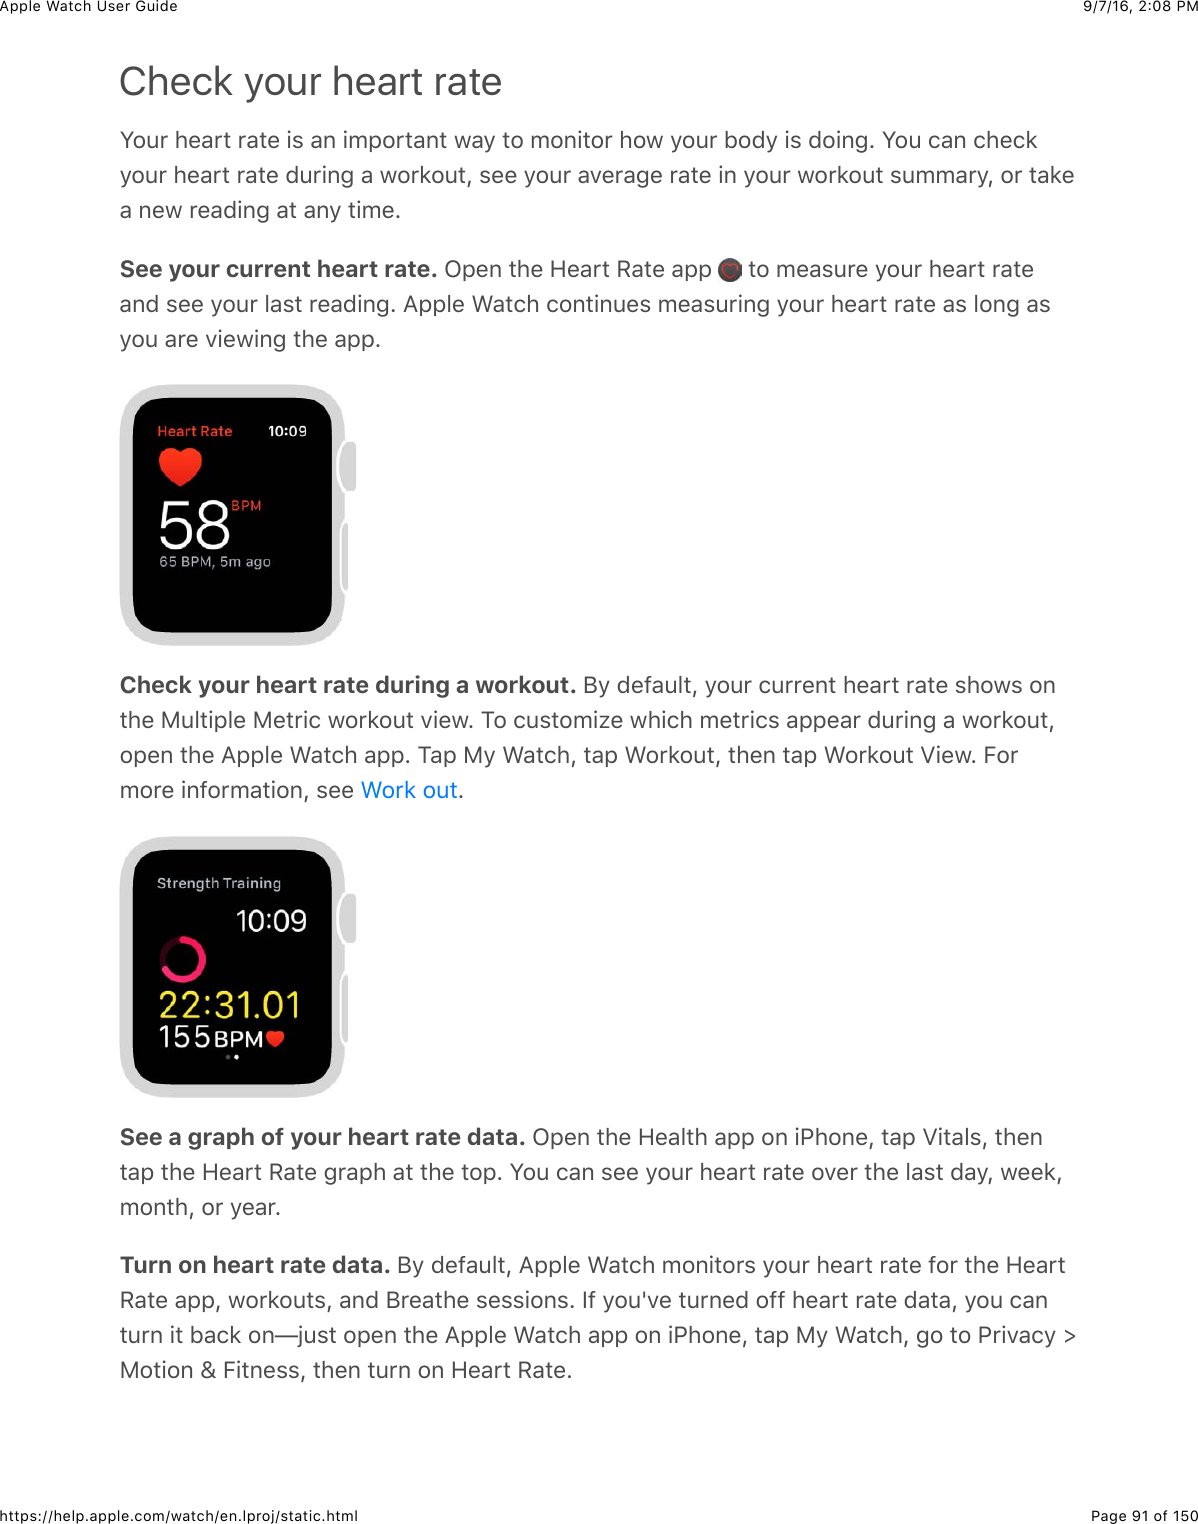 9/7/16, 2)08 PMApple Watch User GuidePage 91 of 150https://help.apple.com/watch/en.lproj/static.htmlCheck your heart rateS#4*&amp;)%&apos;*3&amp;*&apos;3%&amp;+$&amp;&apos;,&amp;+52#*3&apos;,3&amp;7&apos;/&amp;3#&amp;5#,+3#*&amp;)#7&amp;/#4*&amp;B#0/&amp;+$&amp;0#+,-C&amp;S#4&amp;(&apos;,&amp;()%(8/#4*&amp;)%&apos;*3&amp;*&apos;3%&amp;04*+,-&amp;&apos;&amp;7#*8#43J&amp;$%%&amp;/#4*&amp;&apos;.%*&apos;-%&amp;*&apos;3%&amp;+,&amp;/#4*&amp;7#*8#43&amp;$455&apos;*/J&amp;#*&amp;3&apos;8%&apos;&amp;,%7&amp;*%&apos;0+,-&amp;&apos;3&amp;&apos;,/&amp;3+5%CSee your current heart rate. L2%,&amp;3)%&amp;9%&apos;*3&amp;H&apos;3%&amp;&apos;22&amp; &amp;3#&amp;5%&apos;$4*%&amp;/#4*&amp;)%&apos;*3&amp;*&apos;3%&apos;,0&amp;$%%&amp;/#4*&amp;&quot;&apos;$3&amp;*%&apos;0+,-C&amp;=22&quot;%&amp;&gt;&apos;3()&amp;(#,3+,4%$&amp;5%&apos;$4*+,-&amp;/#4*&amp;)%&apos;*3&amp;*&apos;3%&amp;&apos;$&amp;&quot;#,-&amp;&apos;$/#4&amp;&apos;*%&amp;.+%7+,-&amp;3)%&amp;&apos;22CCheck your heart rate during a workout. ;/&amp;0%@&apos;4&quot;3J&amp;/#4*&amp;(4**%,3&amp;)%&apos;*3&amp;*&apos;3%&amp;$)#7$&amp;#,3)%&amp;F4&quot;3+2&quot;%&amp;F%3*+(&amp;7#*8#43&amp;.+%7C&amp;1#&amp;(4$3#5+N%&amp;7)+()&amp;5%3*+($&amp;&apos;22%&apos;*&amp;04*+,-&amp;&apos;&amp;7#*8#43J#2%,&amp;3)%&amp;=22&quot;%&amp;&gt;&apos;3()&amp;&apos;22C&amp;1&apos;2&amp;F/&amp;&gt;&apos;3()J&amp;3&apos;2&amp;&gt;#*8#43J&amp;3)%,&amp;3&apos;2&amp;&gt;#*8#43&amp;_+%7C&amp;E#*5#*%&amp;+,@#*5&apos;3+#,J&amp;$%%&amp; CSee a graph of your heart rate data. L2%,&amp;3)%&amp;9%&apos;&quot;3)&amp;&apos;22&amp;#,&amp;+G)#,%J&amp;3&apos;2&amp;_+3&apos;&quot;$J&amp;3)%,3&apos;2&amp;3)%&amp;9%&apos;*3&amp;H&apos;3%&amp;-*&apos;2)&amp;&apos;3&amp;3)%&amp;3#2C&amp;S#4&amp;(&apos;,&amp;$%%&amp;/#4*&amp;)%&apos;*3&amp;*&apos;3%&amp;#.%*&amp;3)%&amp;&quot;&apos;$3&amp;0&apos;/J&amp;7%%8J5#,3)J&amp;#*&amp;/%&apos;*CTurn on heart rate data. ;/&amp;0%@&apos;4&quot;3J&amp;=22&quot;%&amp;&gt;&apos;3()&amp;5#,+3#*$&amp;/#4*&amp;)%&apos;*3&amp;*&apos;3%&amp;@#*&amp;3)%&amp;9%&apos;*3H&apos;3%&amp;&apos;22J&amp;7#*8#43$J&amp;&apos;,0&amp;;*%&apos;3)%&amp;$%$$+#,$C&amp;Y@&amp;/#4t.%&amp;34*,%0&amp;#@@&amp;)%&apos;*3&amp;*&apos;3%&amp;0&apos;3&apos;J&amp;/#4&amp;(&apos;,34*,&amp;+3&amp;B&apos;(8&amp;#,TO4$3&amp;#2%,&amp;3)%&amp;=22&quot;%&amp;&gt;&apos;3()&amp;&apos;22&amp;#,&amp;+G)#,%J&amp;3&apos;2&amp;F/&amp;&gt;&apos;3()J&amp;-#&amp;3#&amp;G*+.&apos;(/&amp;dF#3+#,&amp;h&amp;E+3,%$$J&amp;3)%,&amp;34*,&amp;#,&amp;9%&apos;*3&amp;H&apos;3%C&gt;#*8&amp;#43